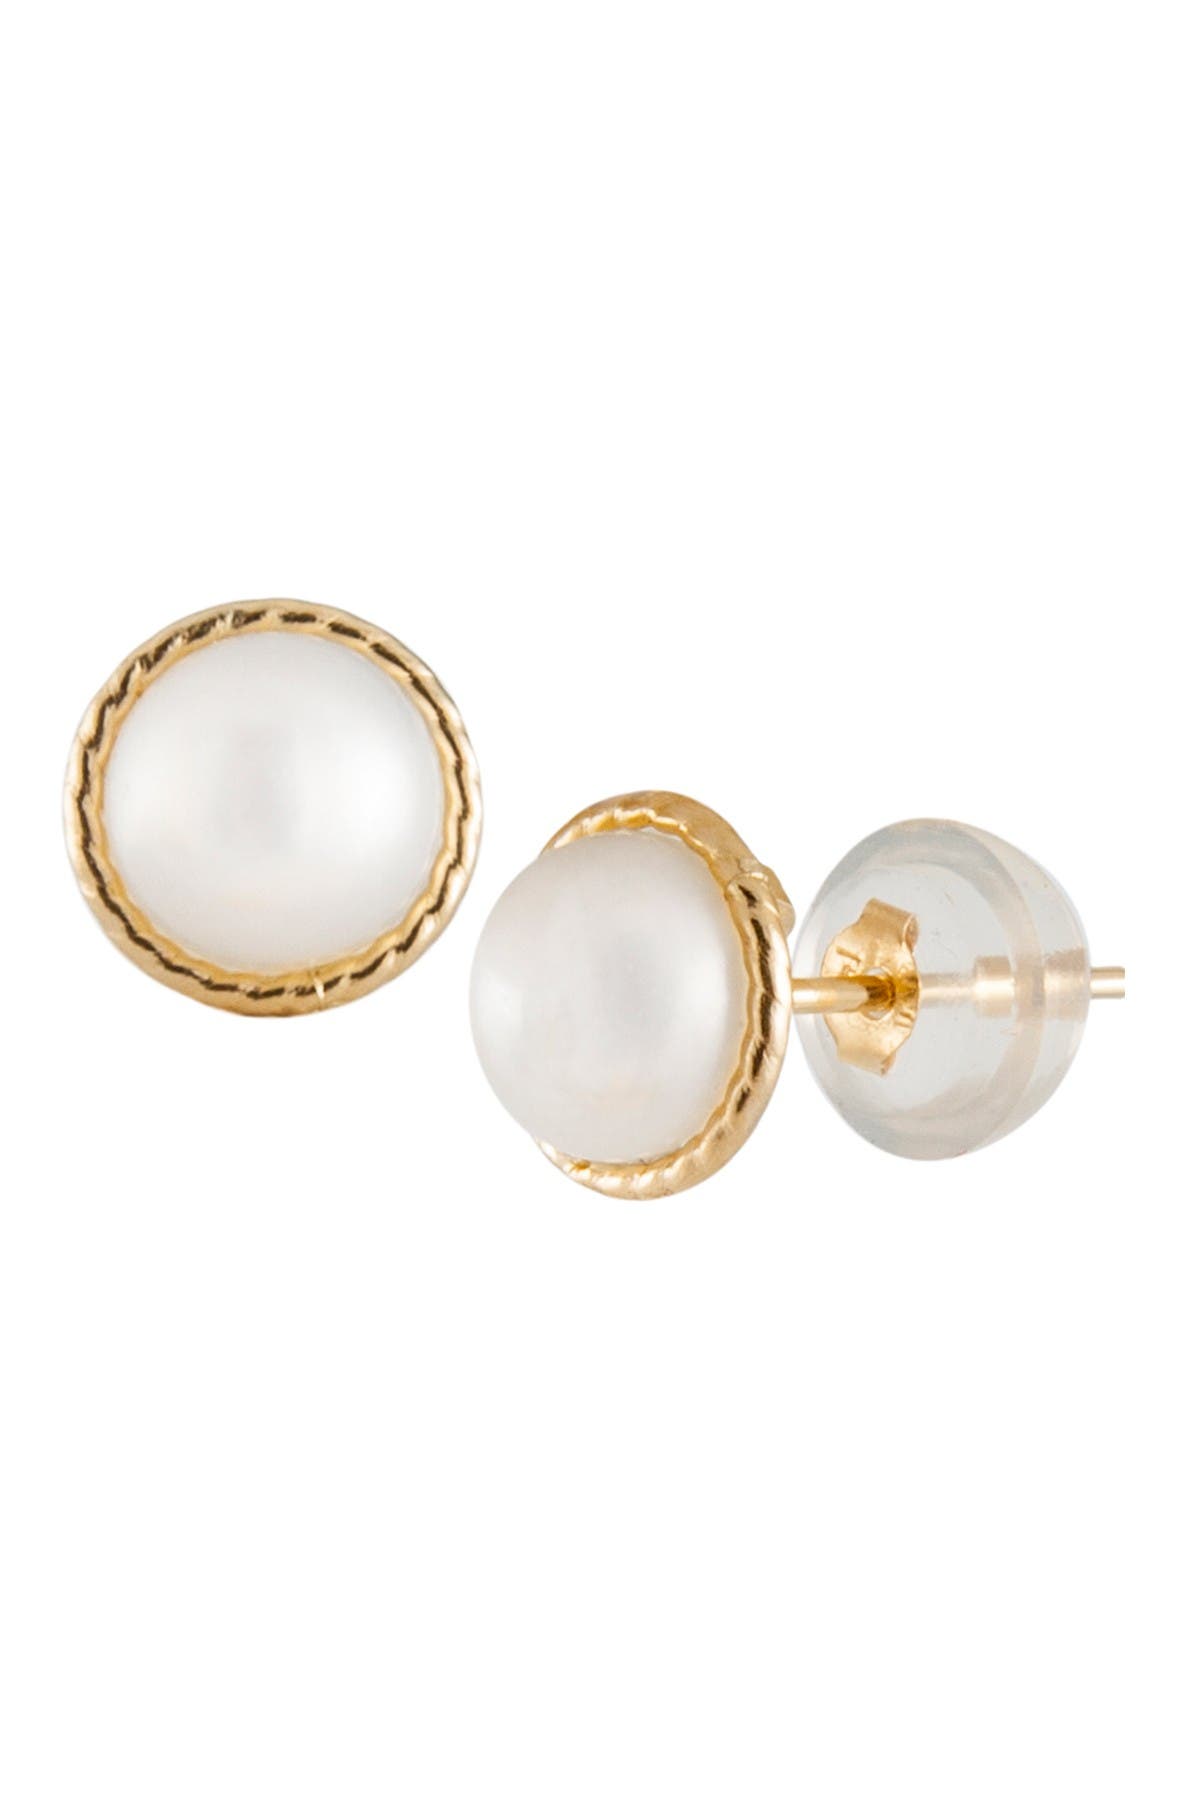 Splendid Pearls 14k Gold Freshwater Pearl Earrings In Natural White